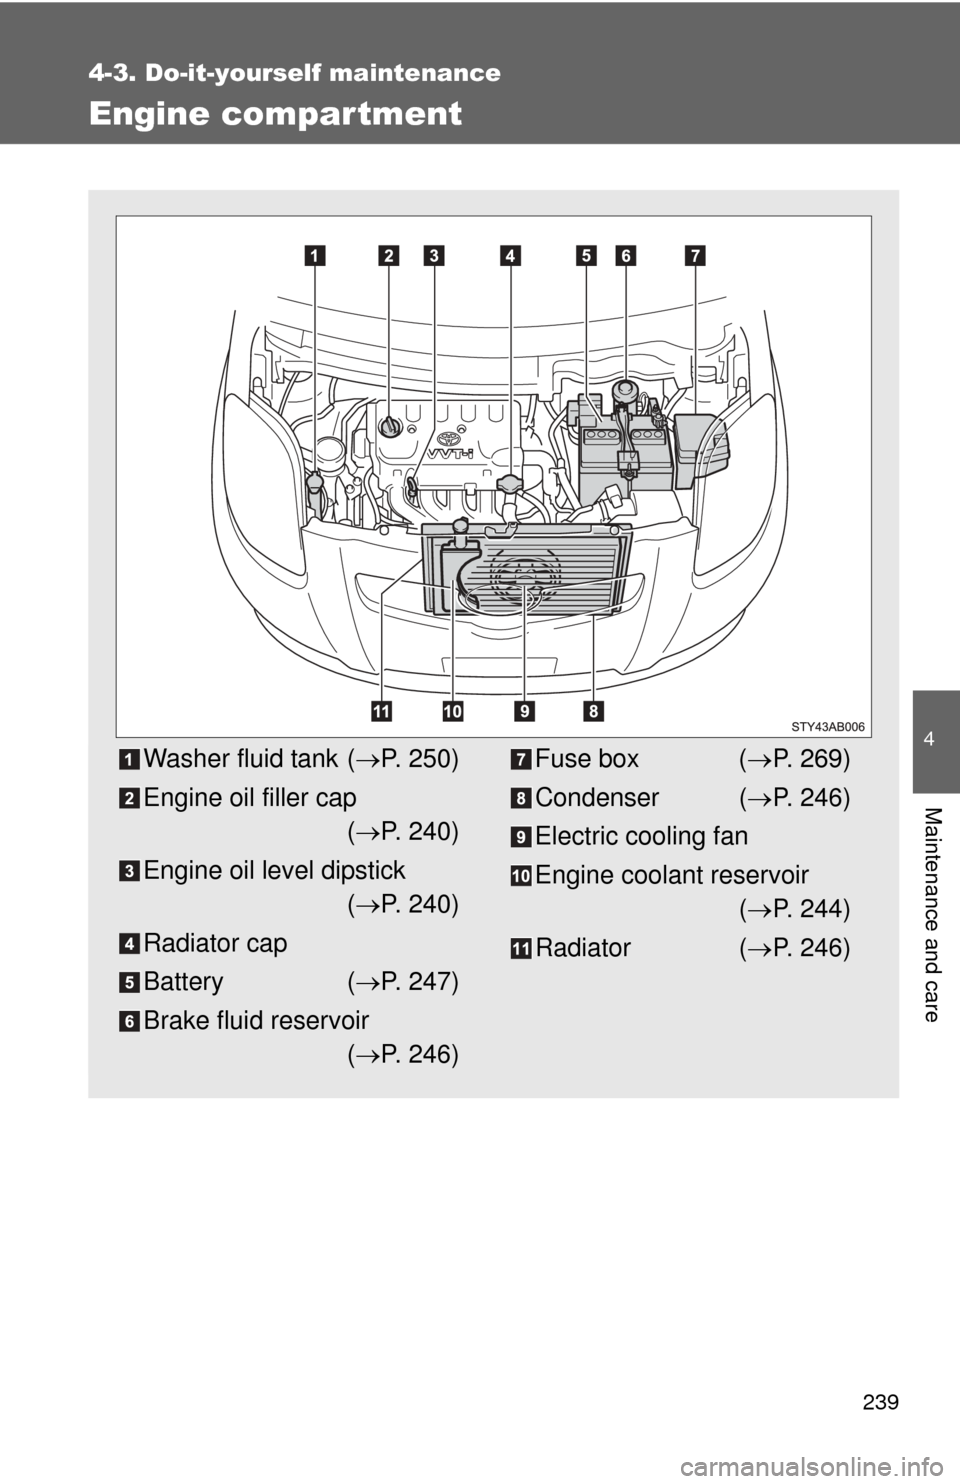 TOYOTA YARIS 2008 2.G Owners Manual 239
4-3. Do-it-yourself maintenance
4
Maintenance and care
Engine compar tment
Washer fluid tank (P. 250)
Engine oil filler cap ( P. 240)
Engine oil level dipstick ( P. 240)
Radiator cap
Batt